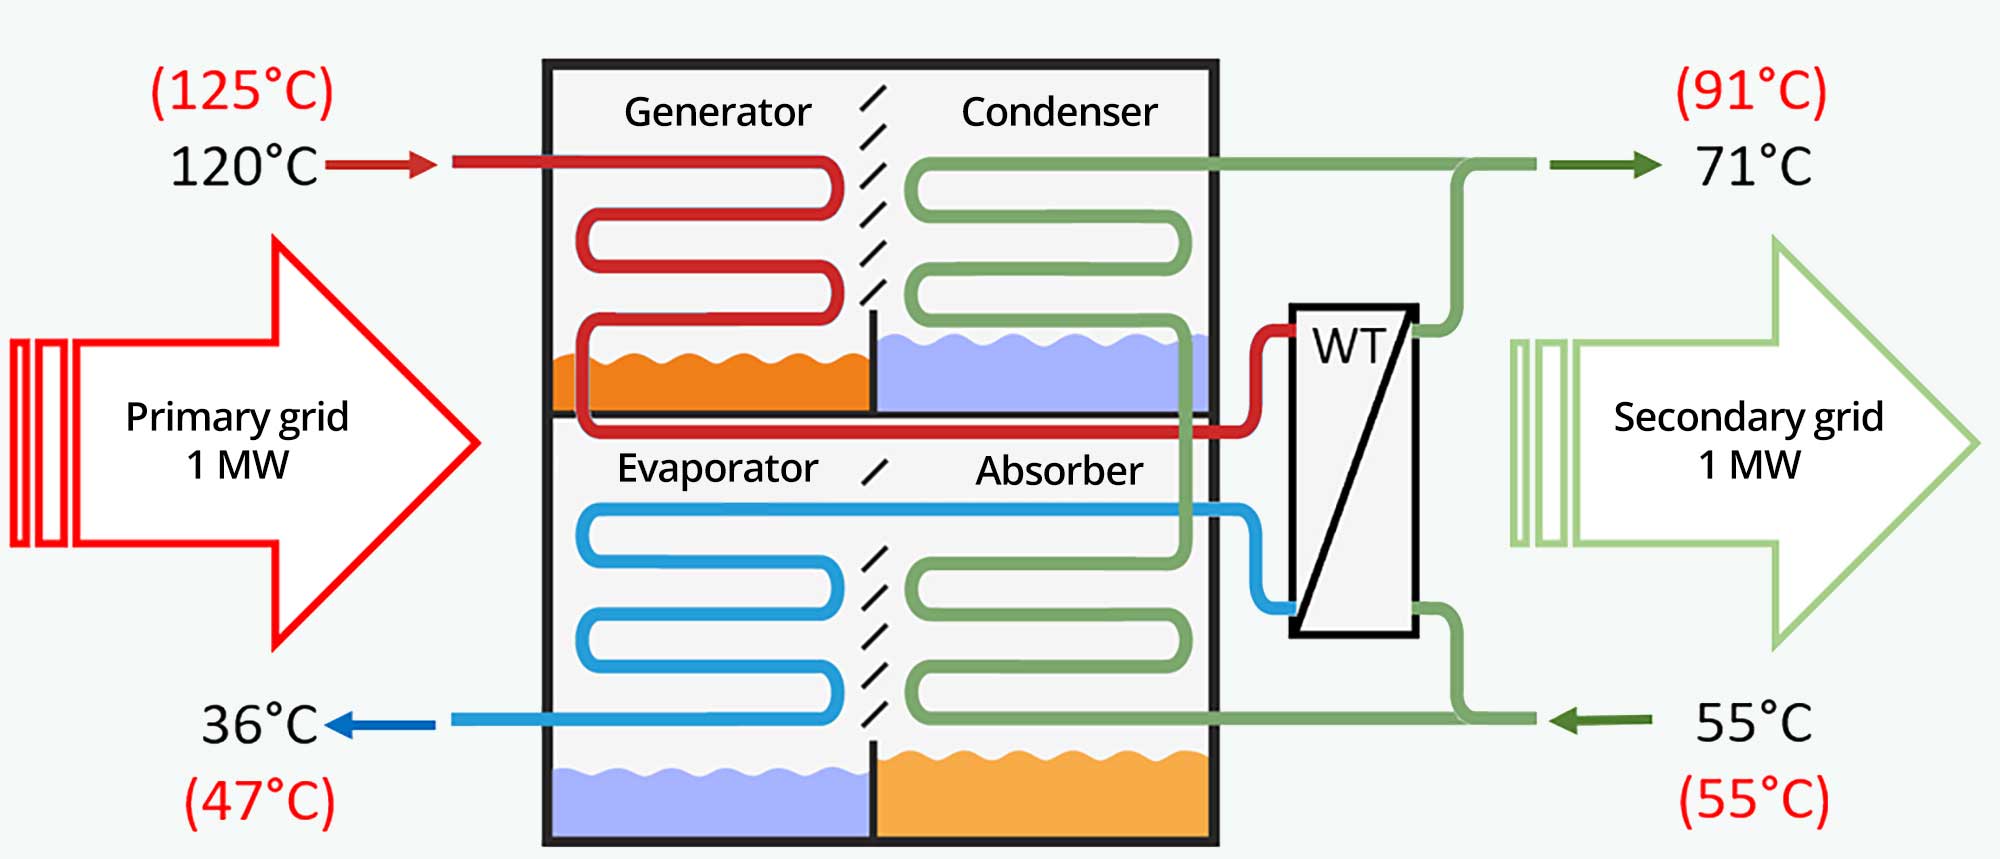 Absorption heat exchangers